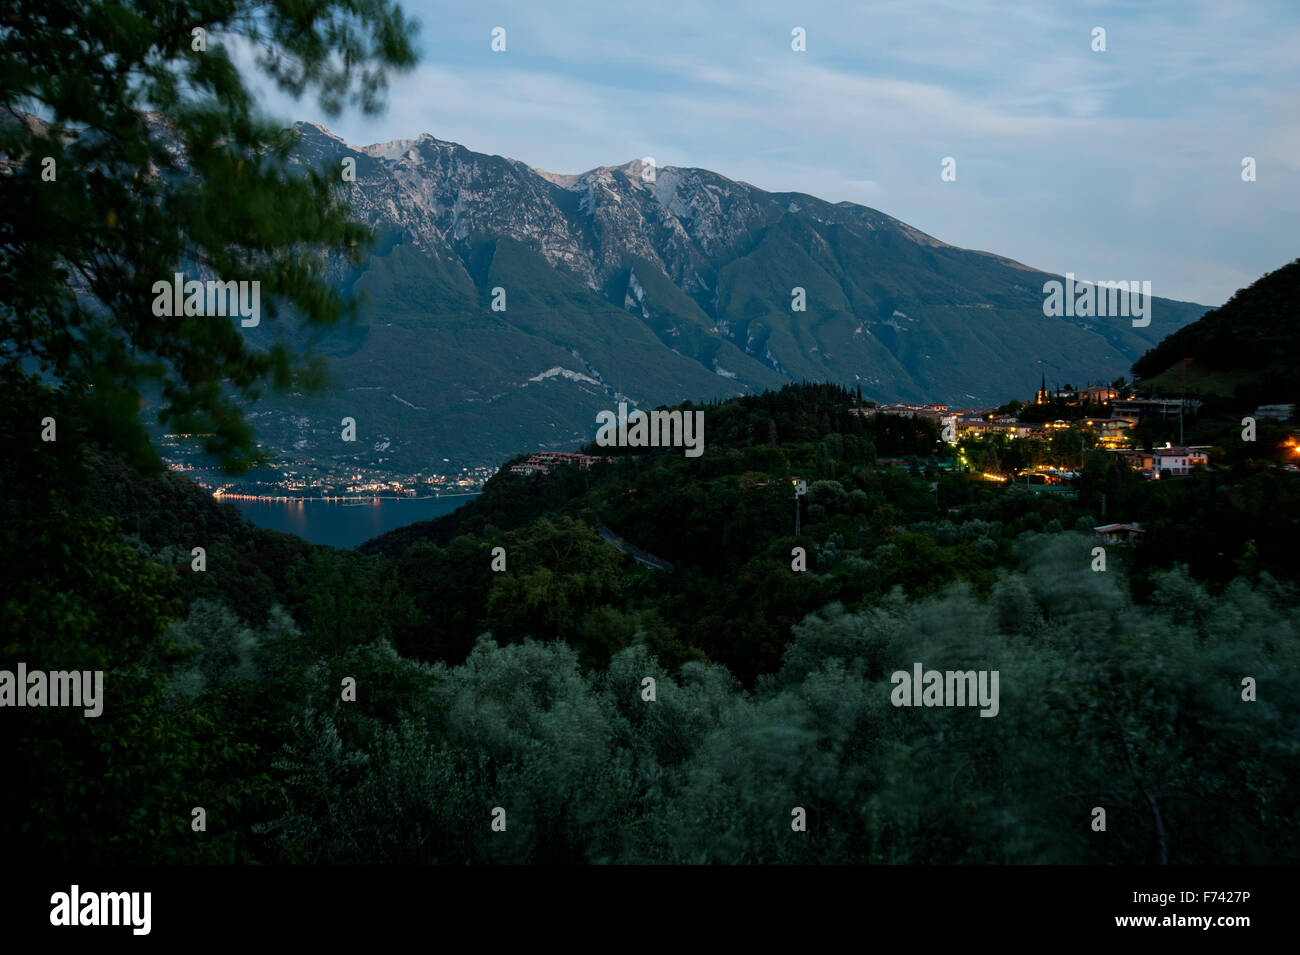 Night over Lago di Garda, View from Tremosine with Village Pieve and Monte Baldo- Italy Stock Photo